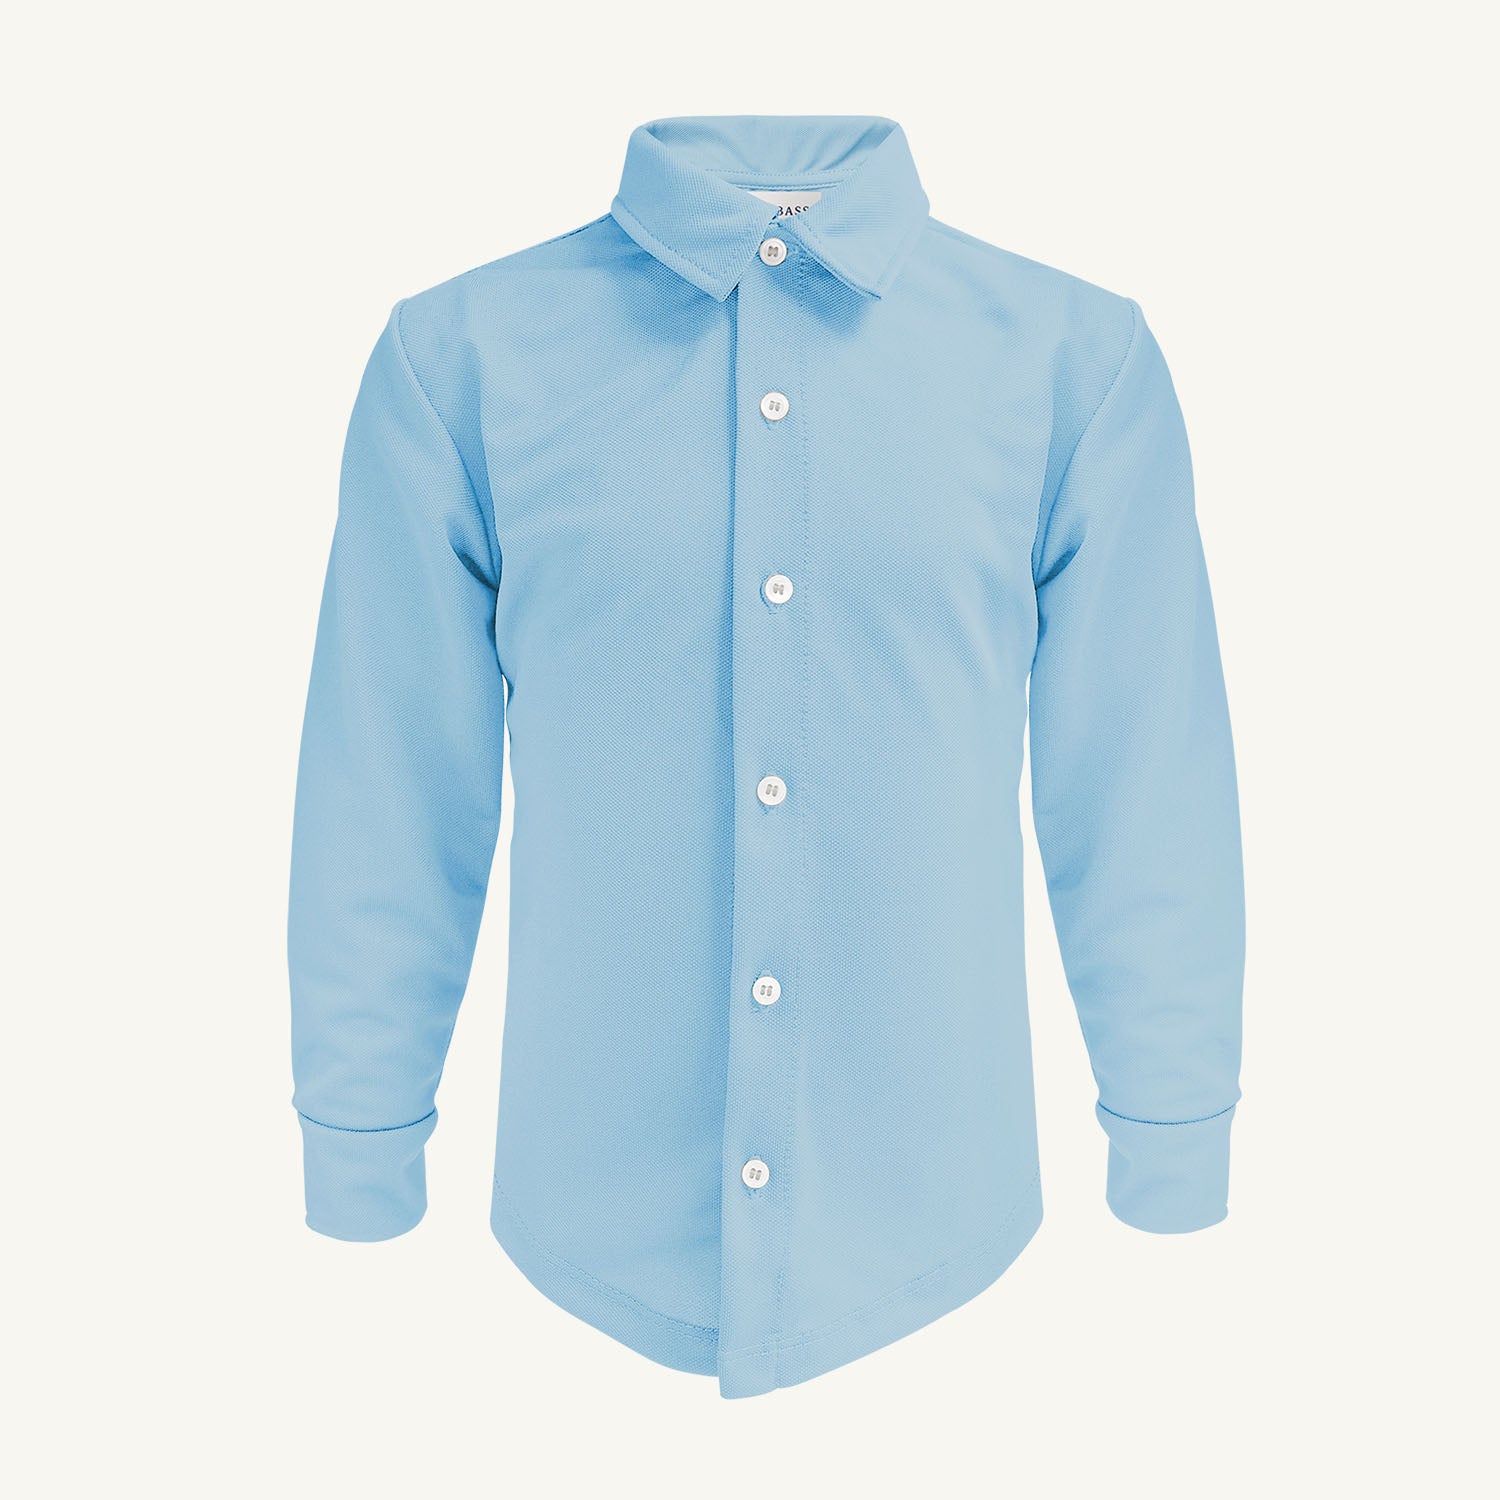 Camisa de niño con protección solar - azul claro